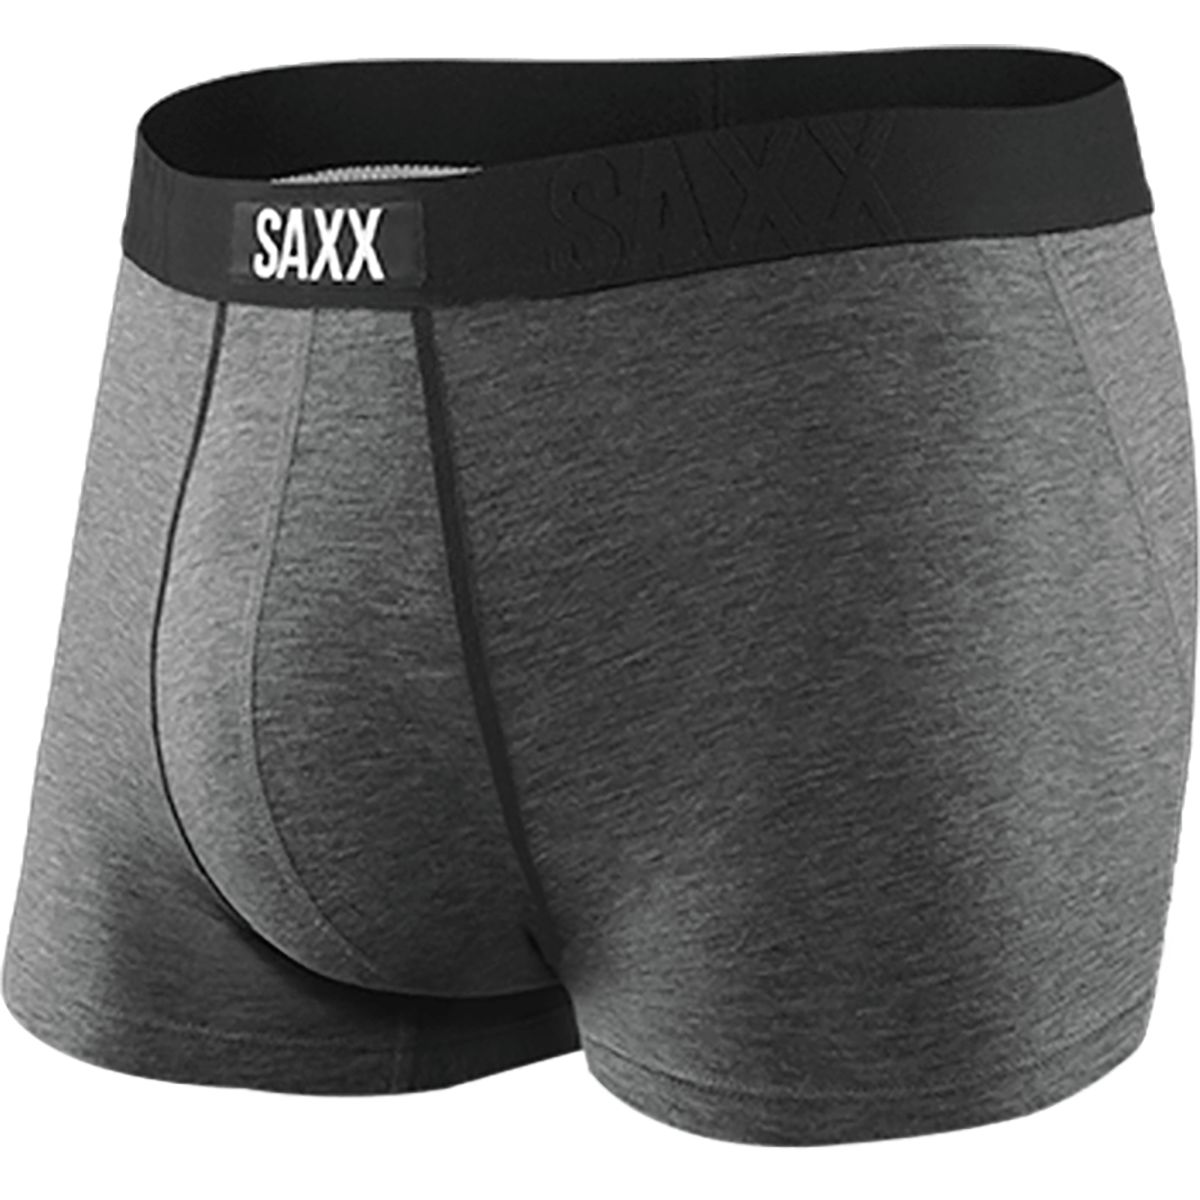 SAXX NEW Mens Vibe Trunks Underwear Black BNWT